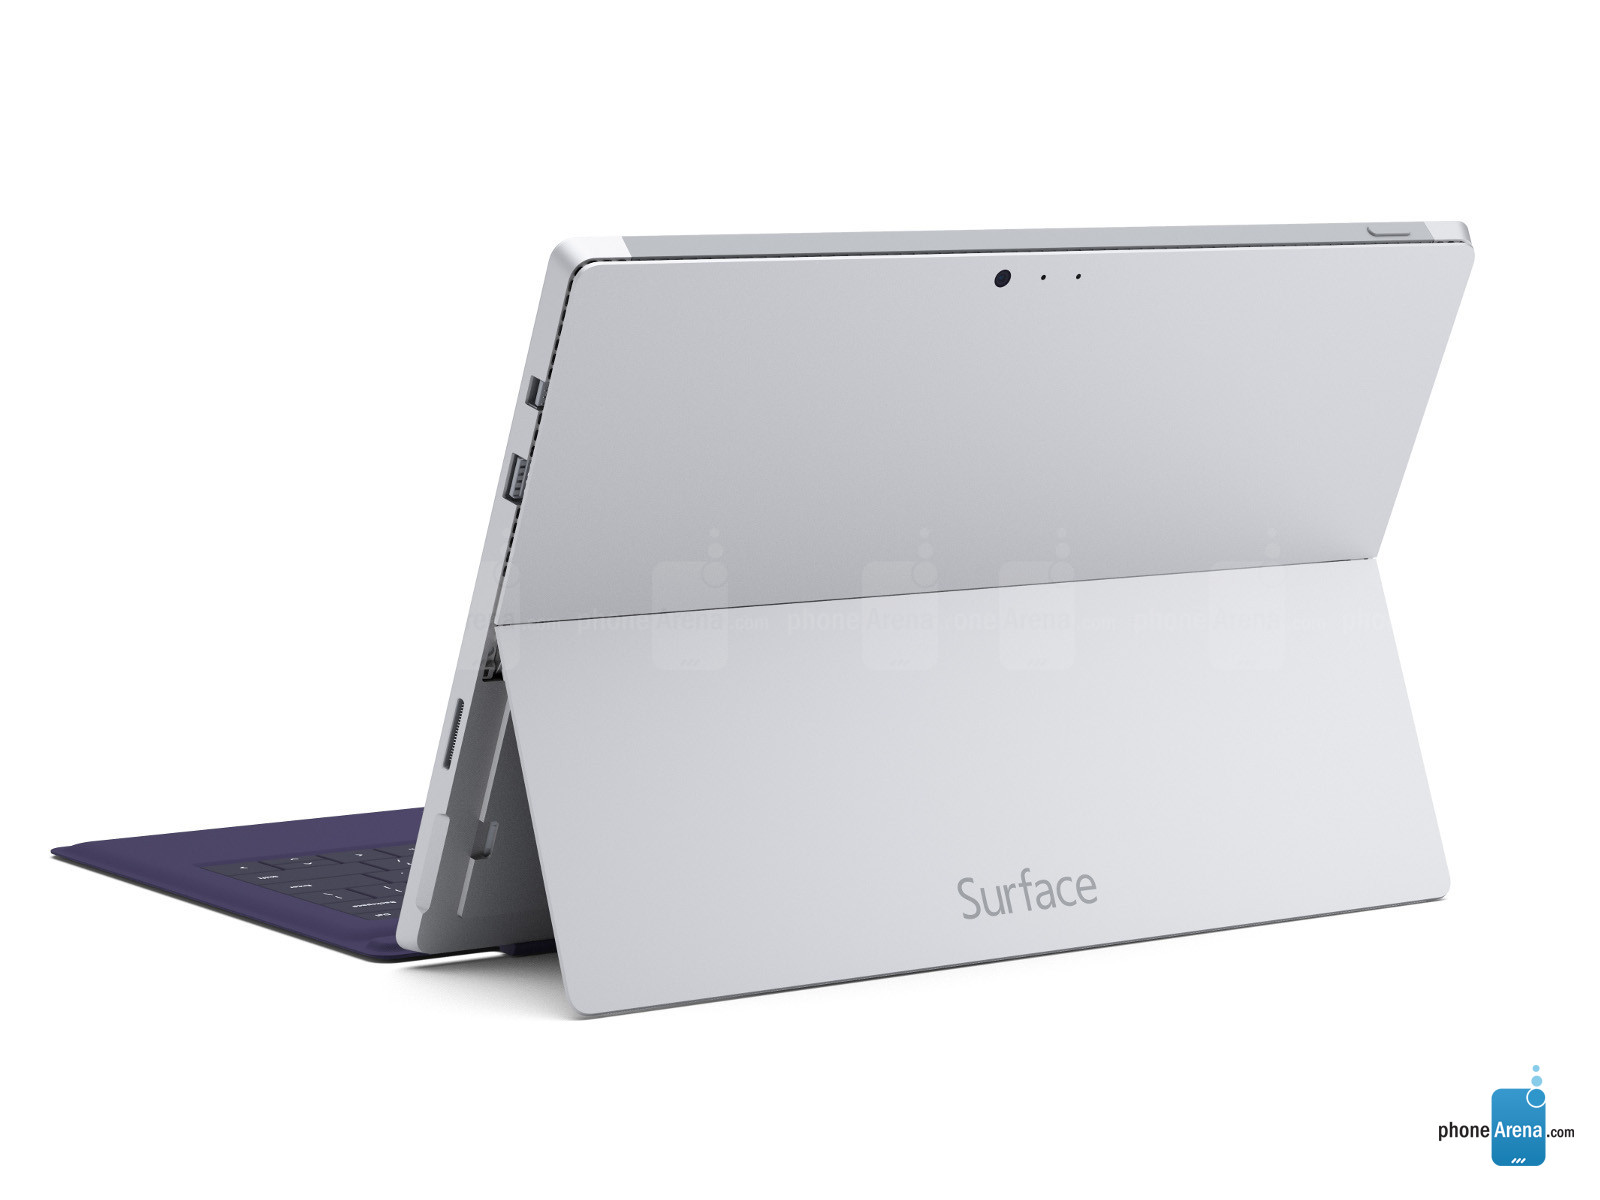 Microsoft xác nhận lỗi kết nối trên tablet Surface Pro 3